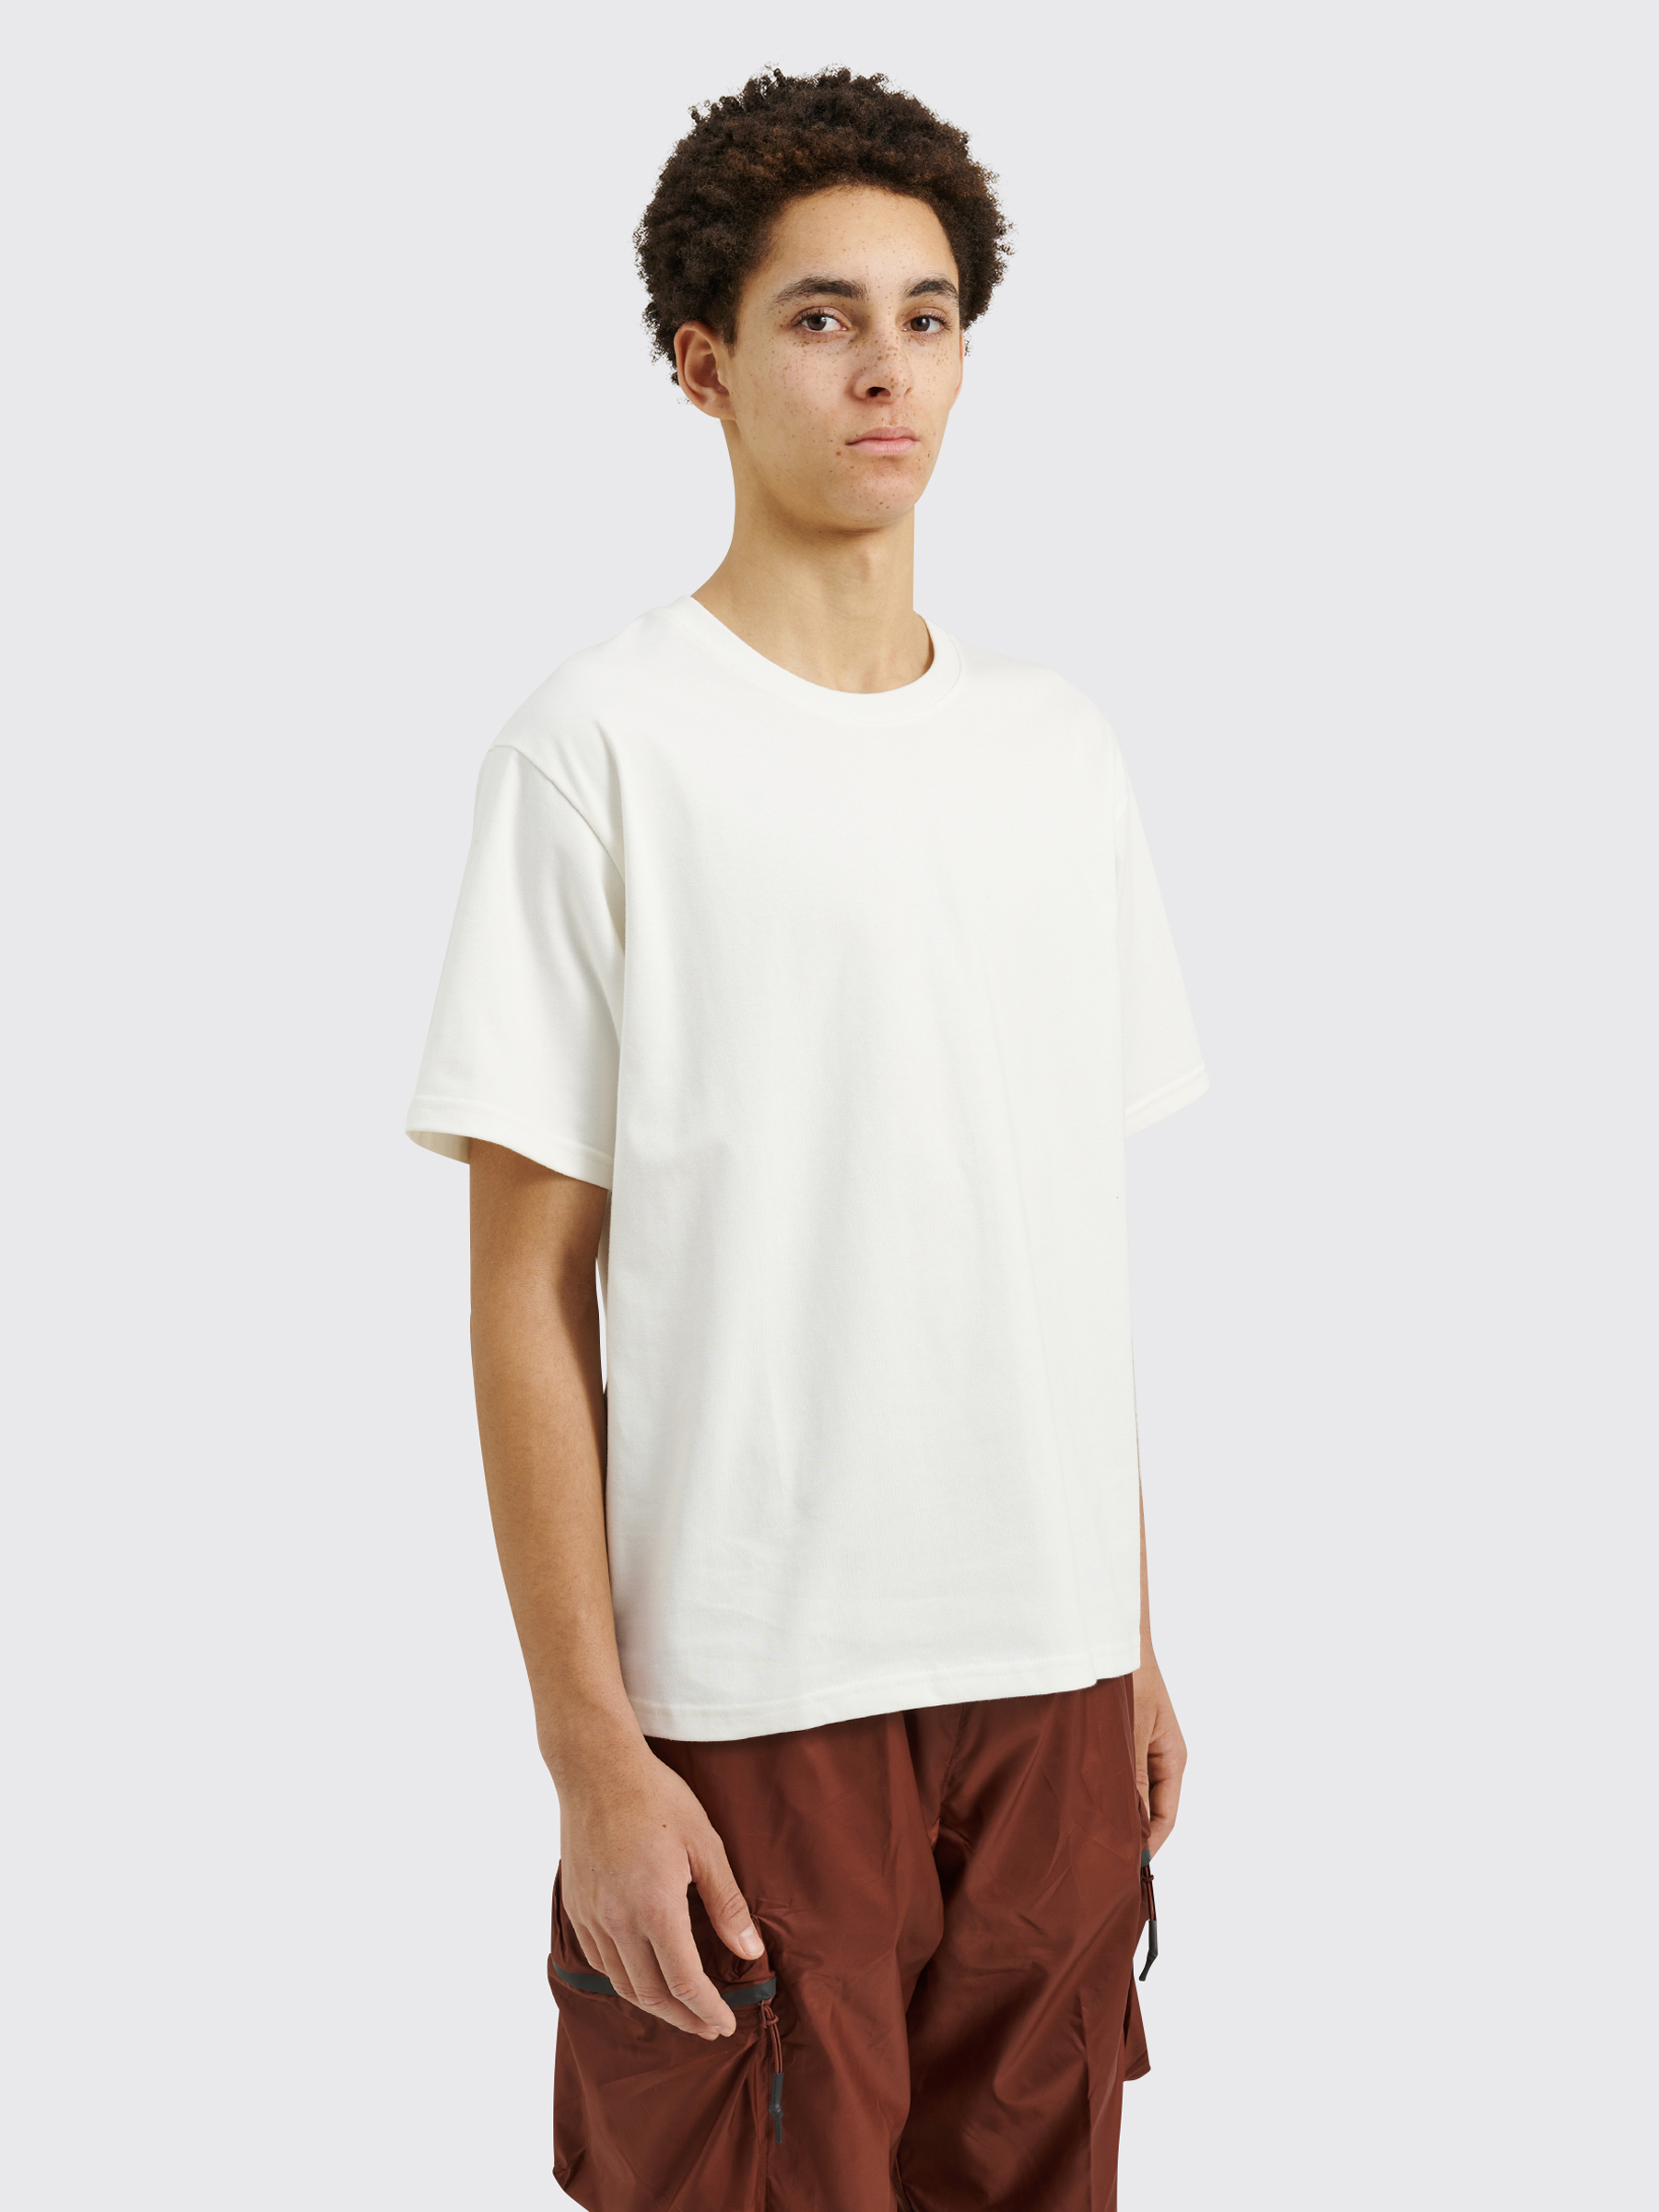 Très Bien - Nike Dri-FIT Short-Sleeve T-shirt Sail White